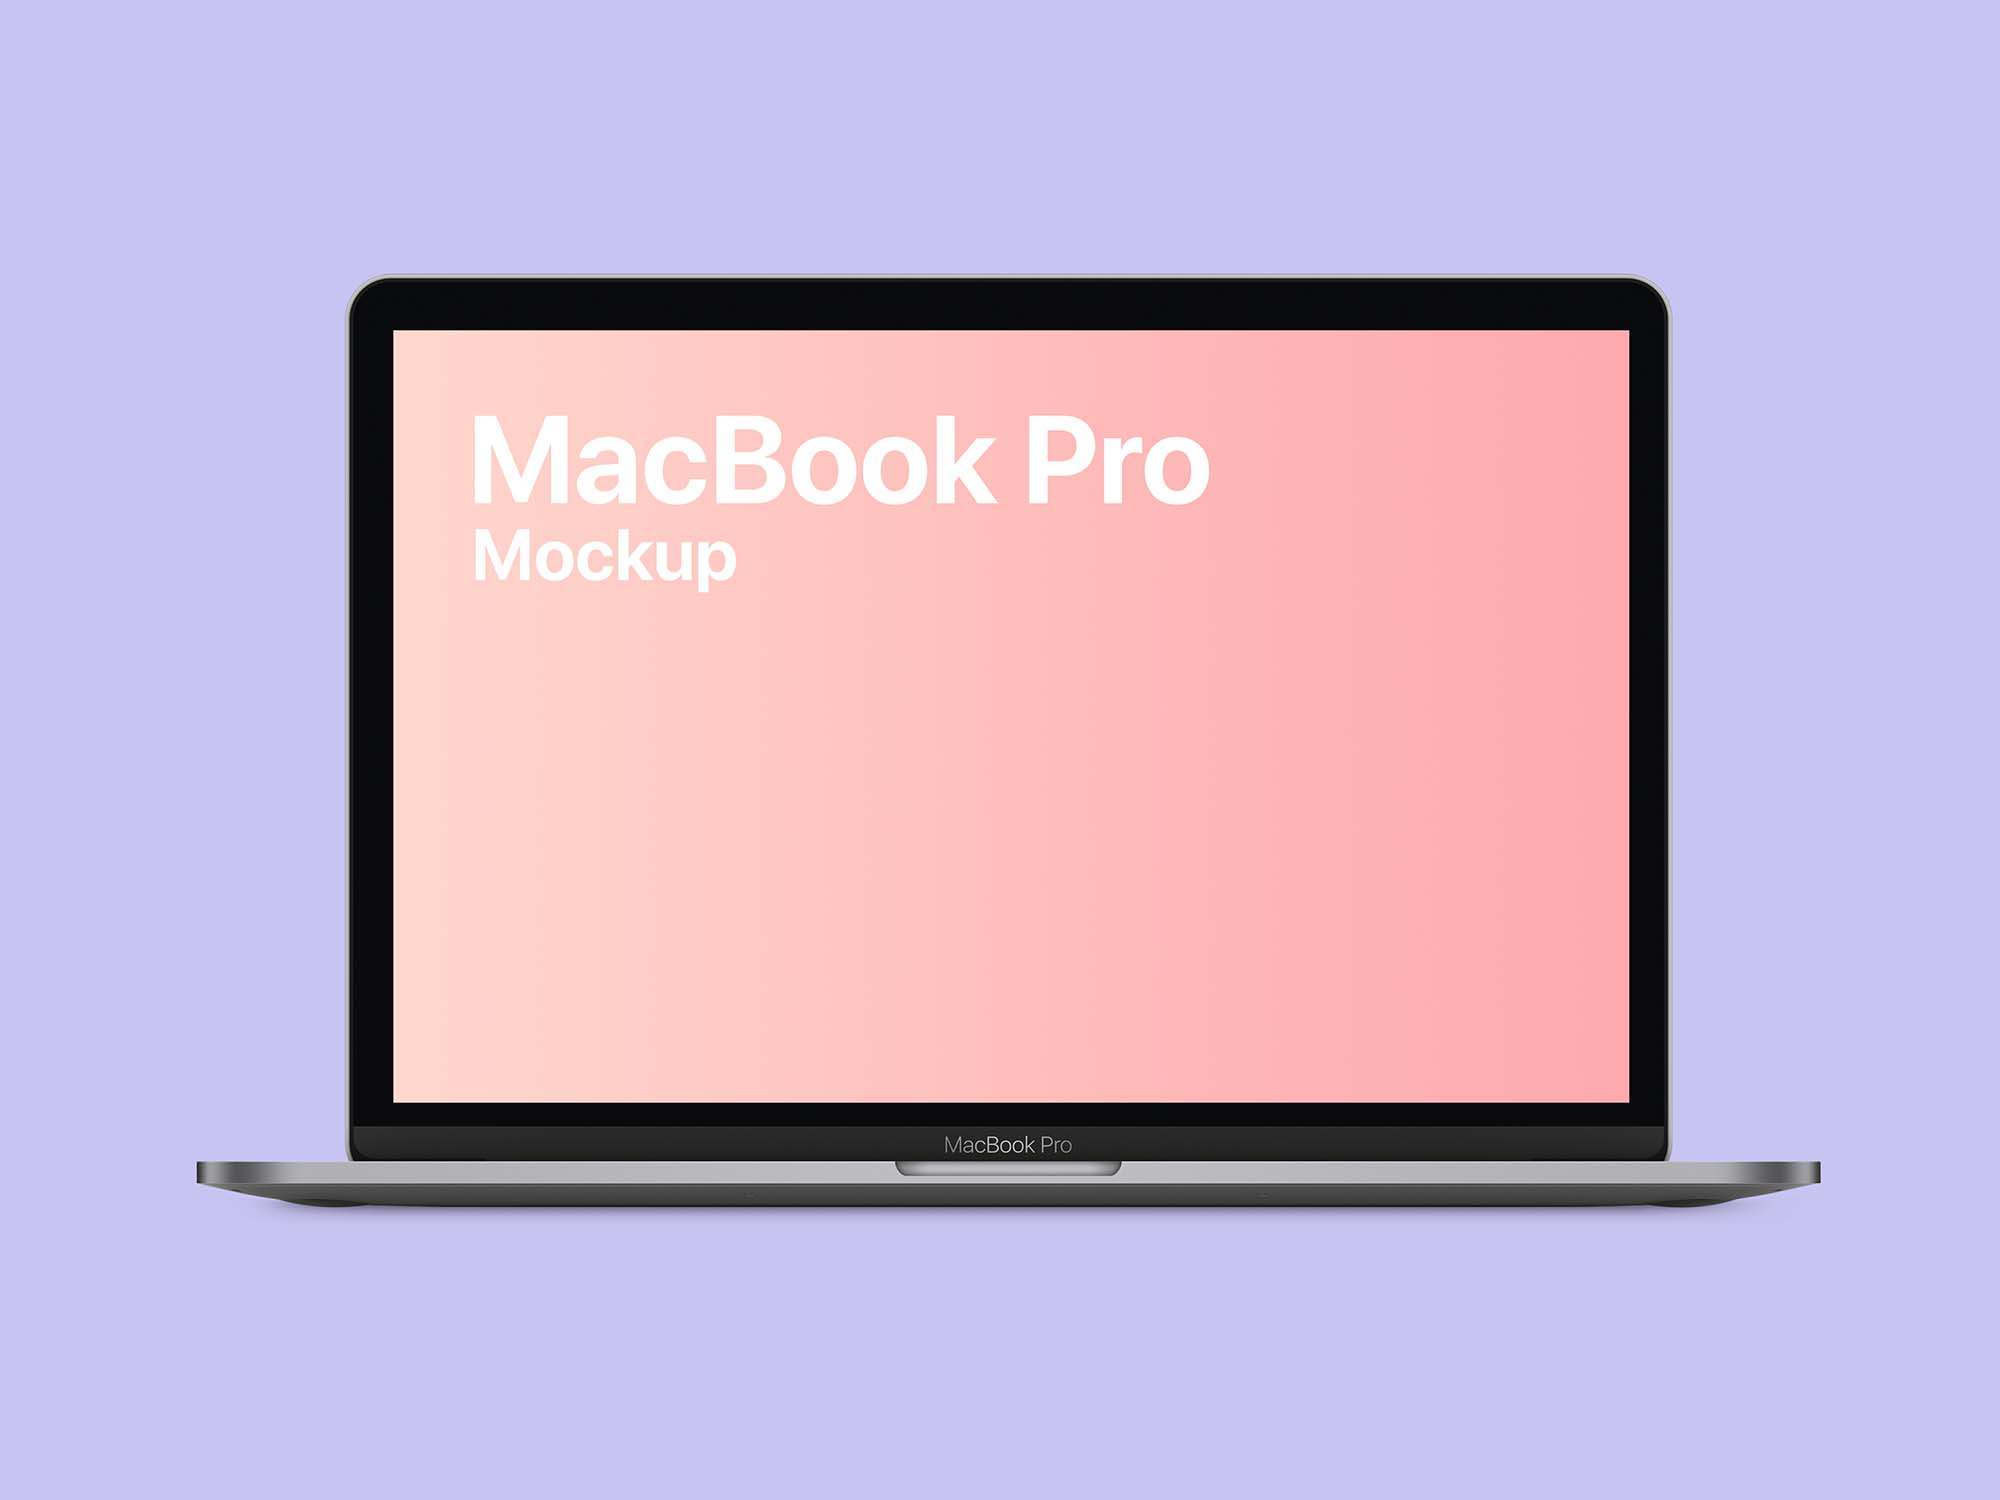 Standard Macbook Pro Mockup